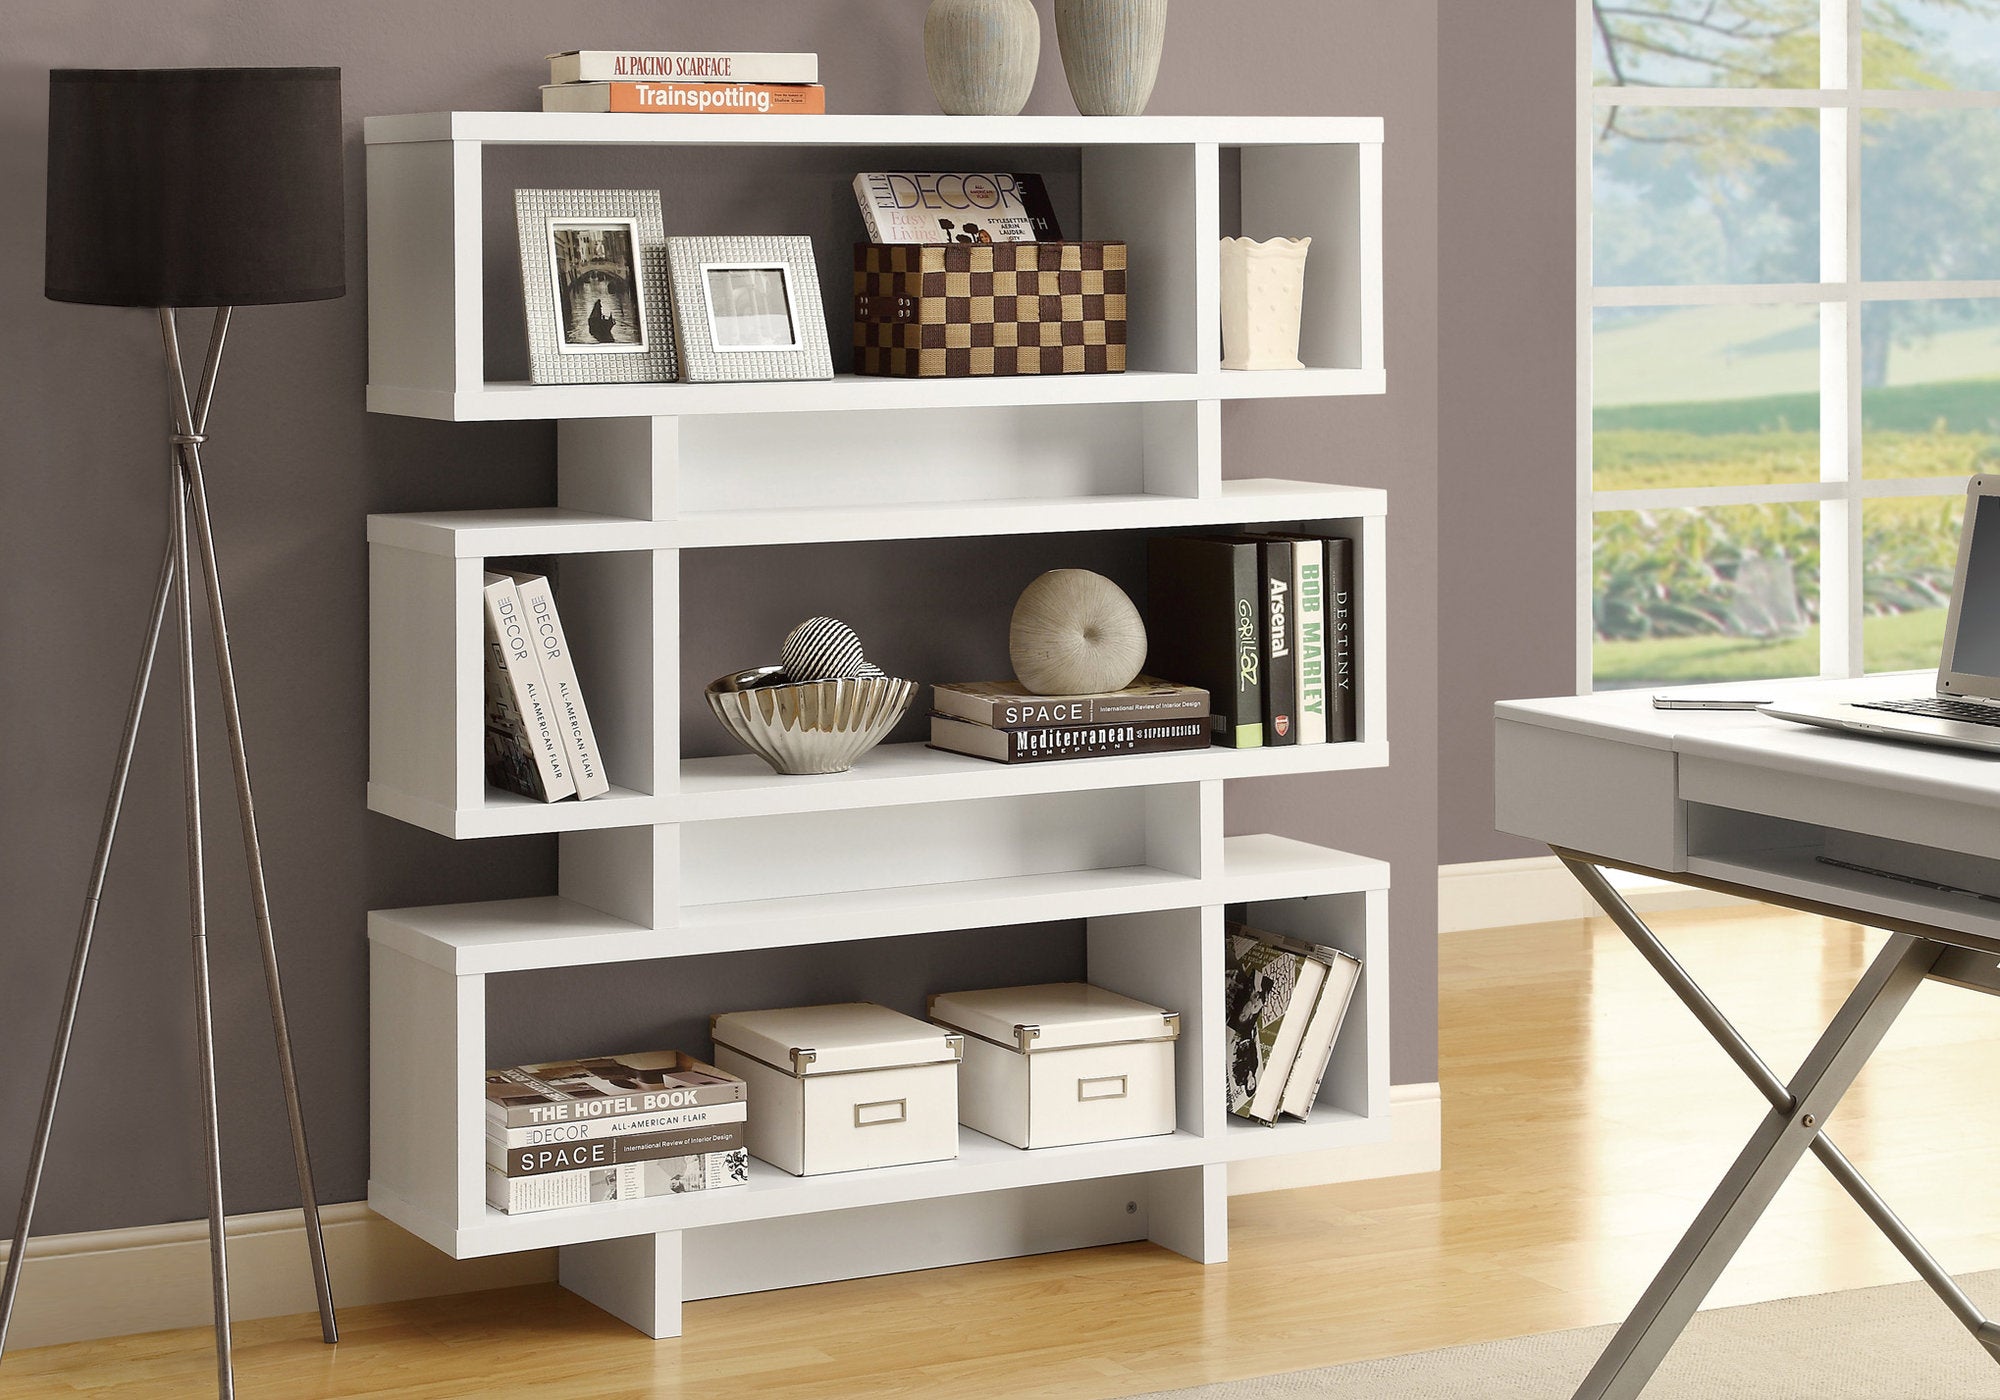 MN-532532    Bookshelf, Bookcase, Etagere, 4 Tier, Office, Bedroom, 55"H, Laminate, White, Contemporary, Modern